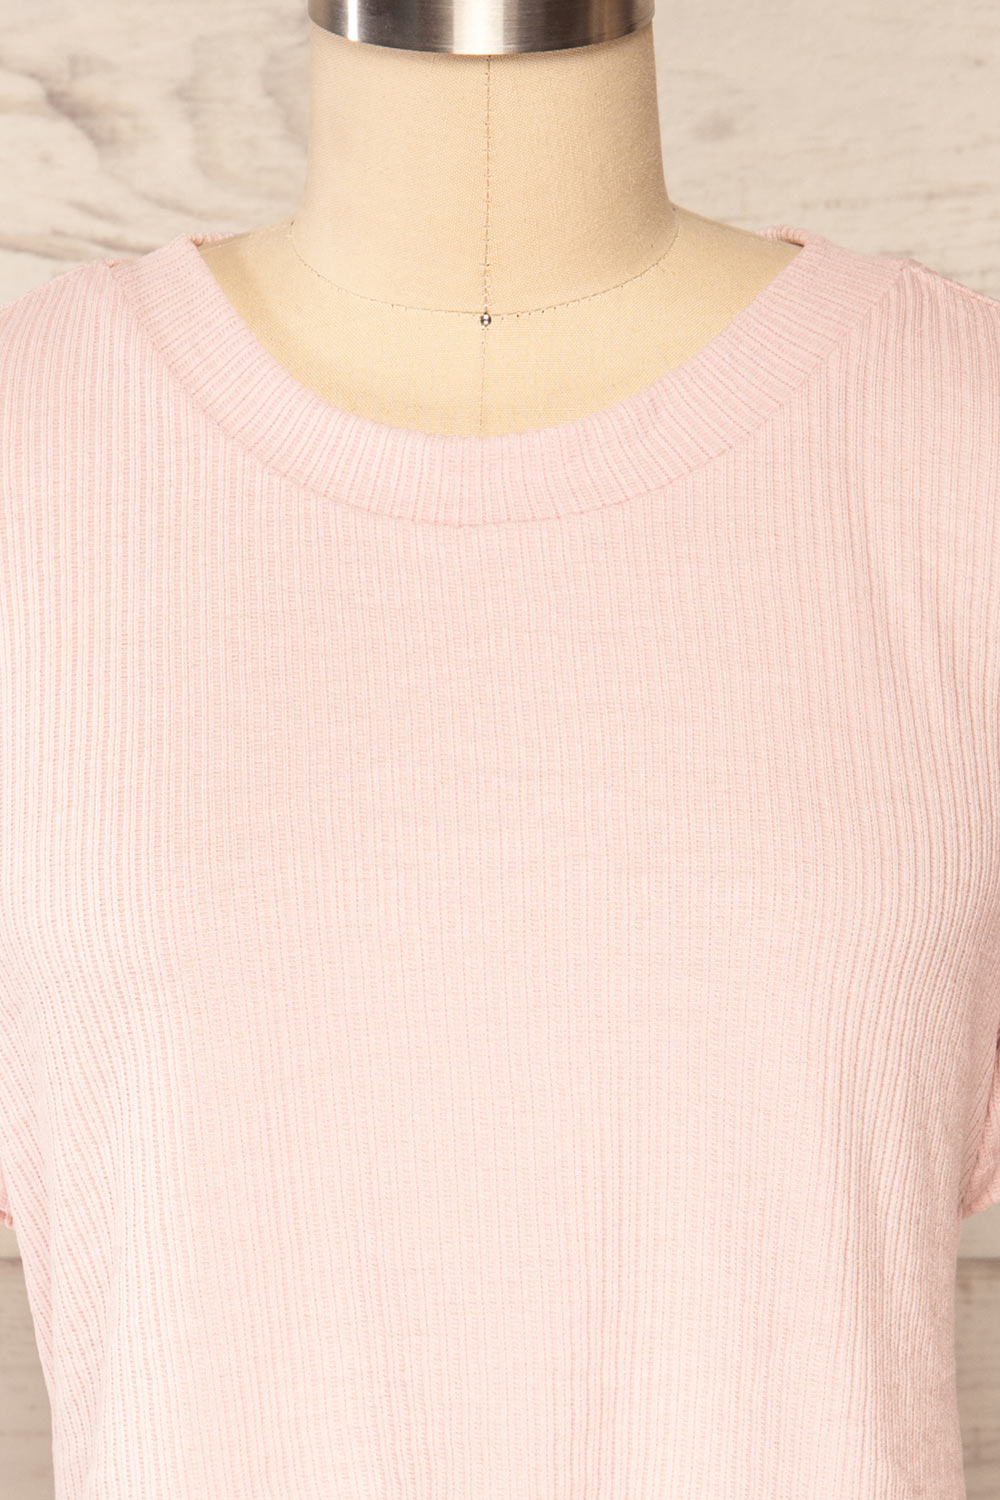 Set Dignes Pink Ribbed T-Shirt & Shorts | La petite garçonne top front close up